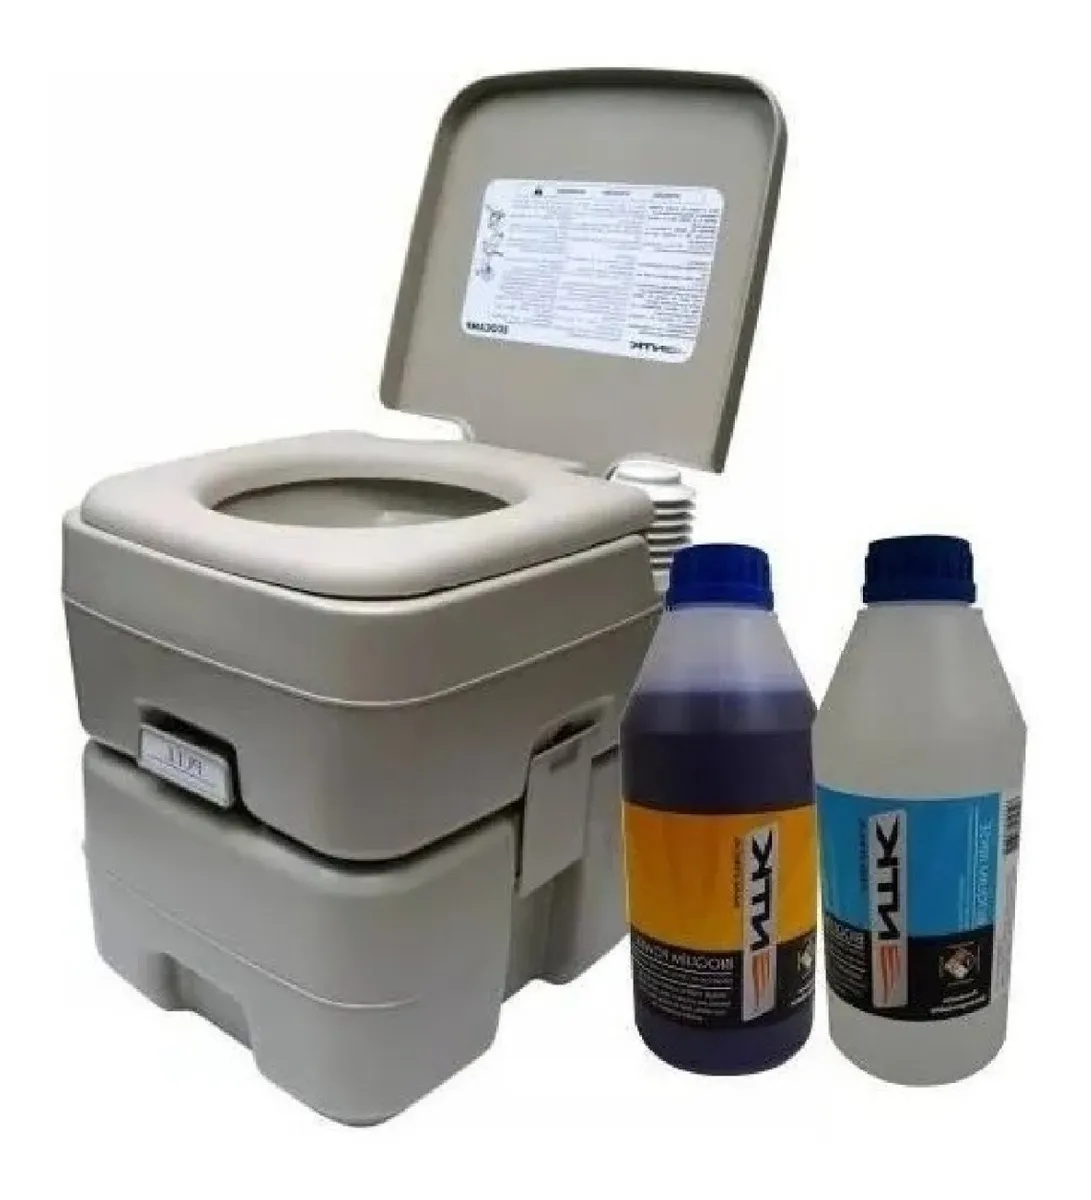 Inodoro químico portátil WC Flush - Outlet Piscinas